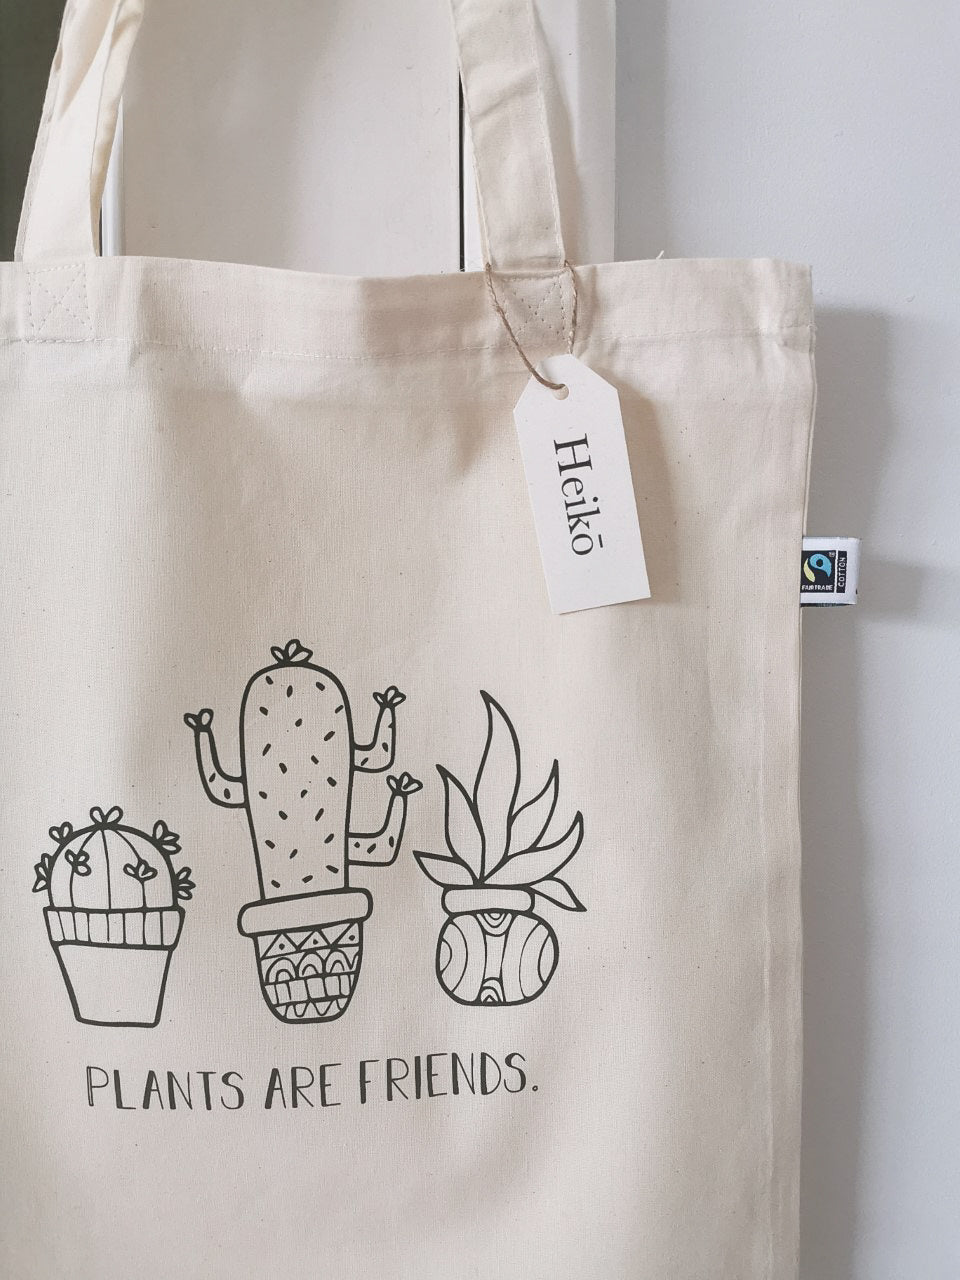 Plants are Friends Tote Bag - Vegan - 100% Organic Cotton